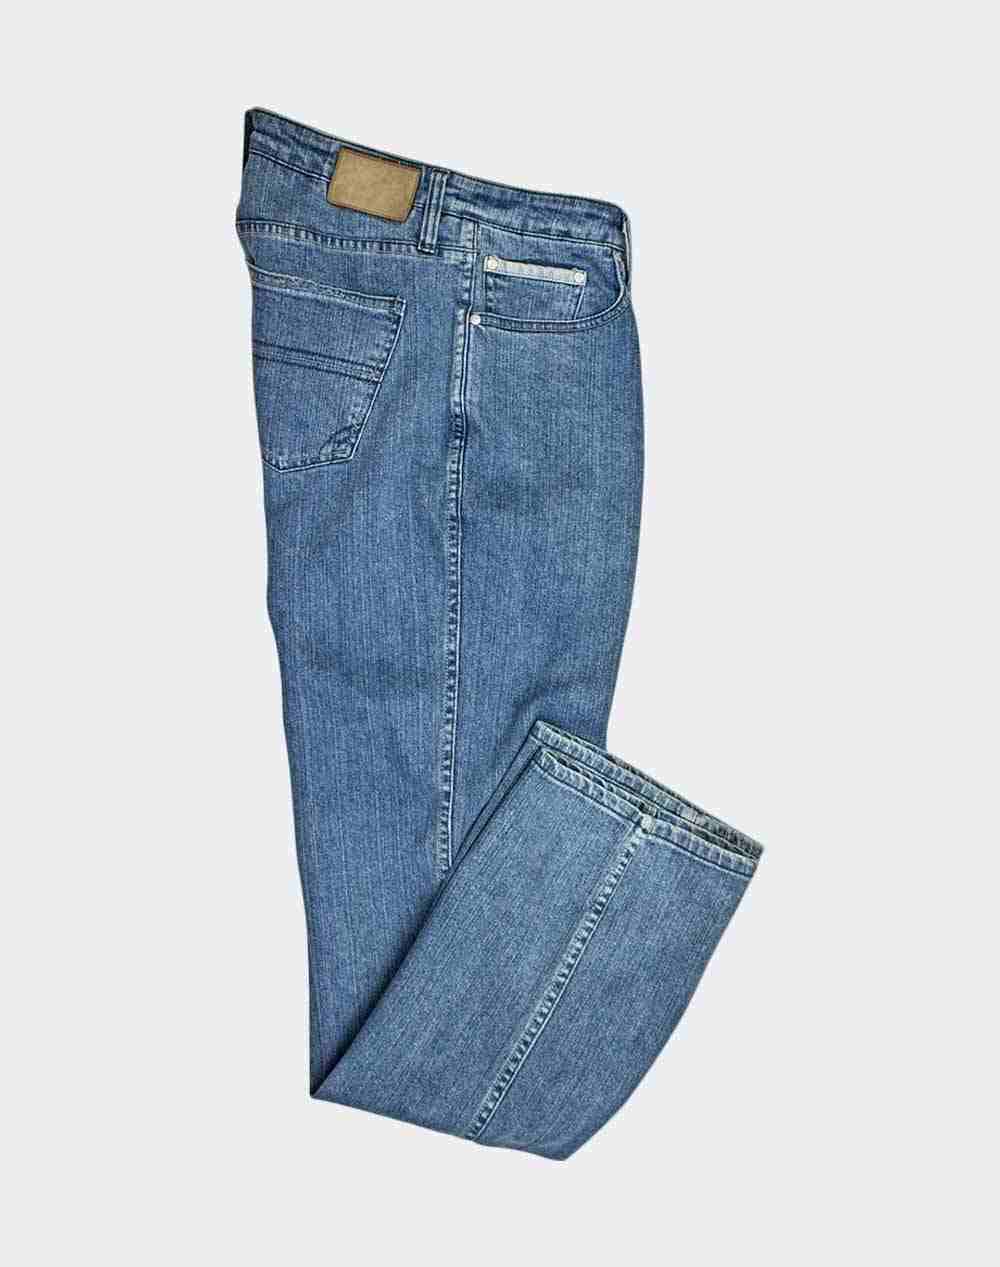 Mens Jeans Pant